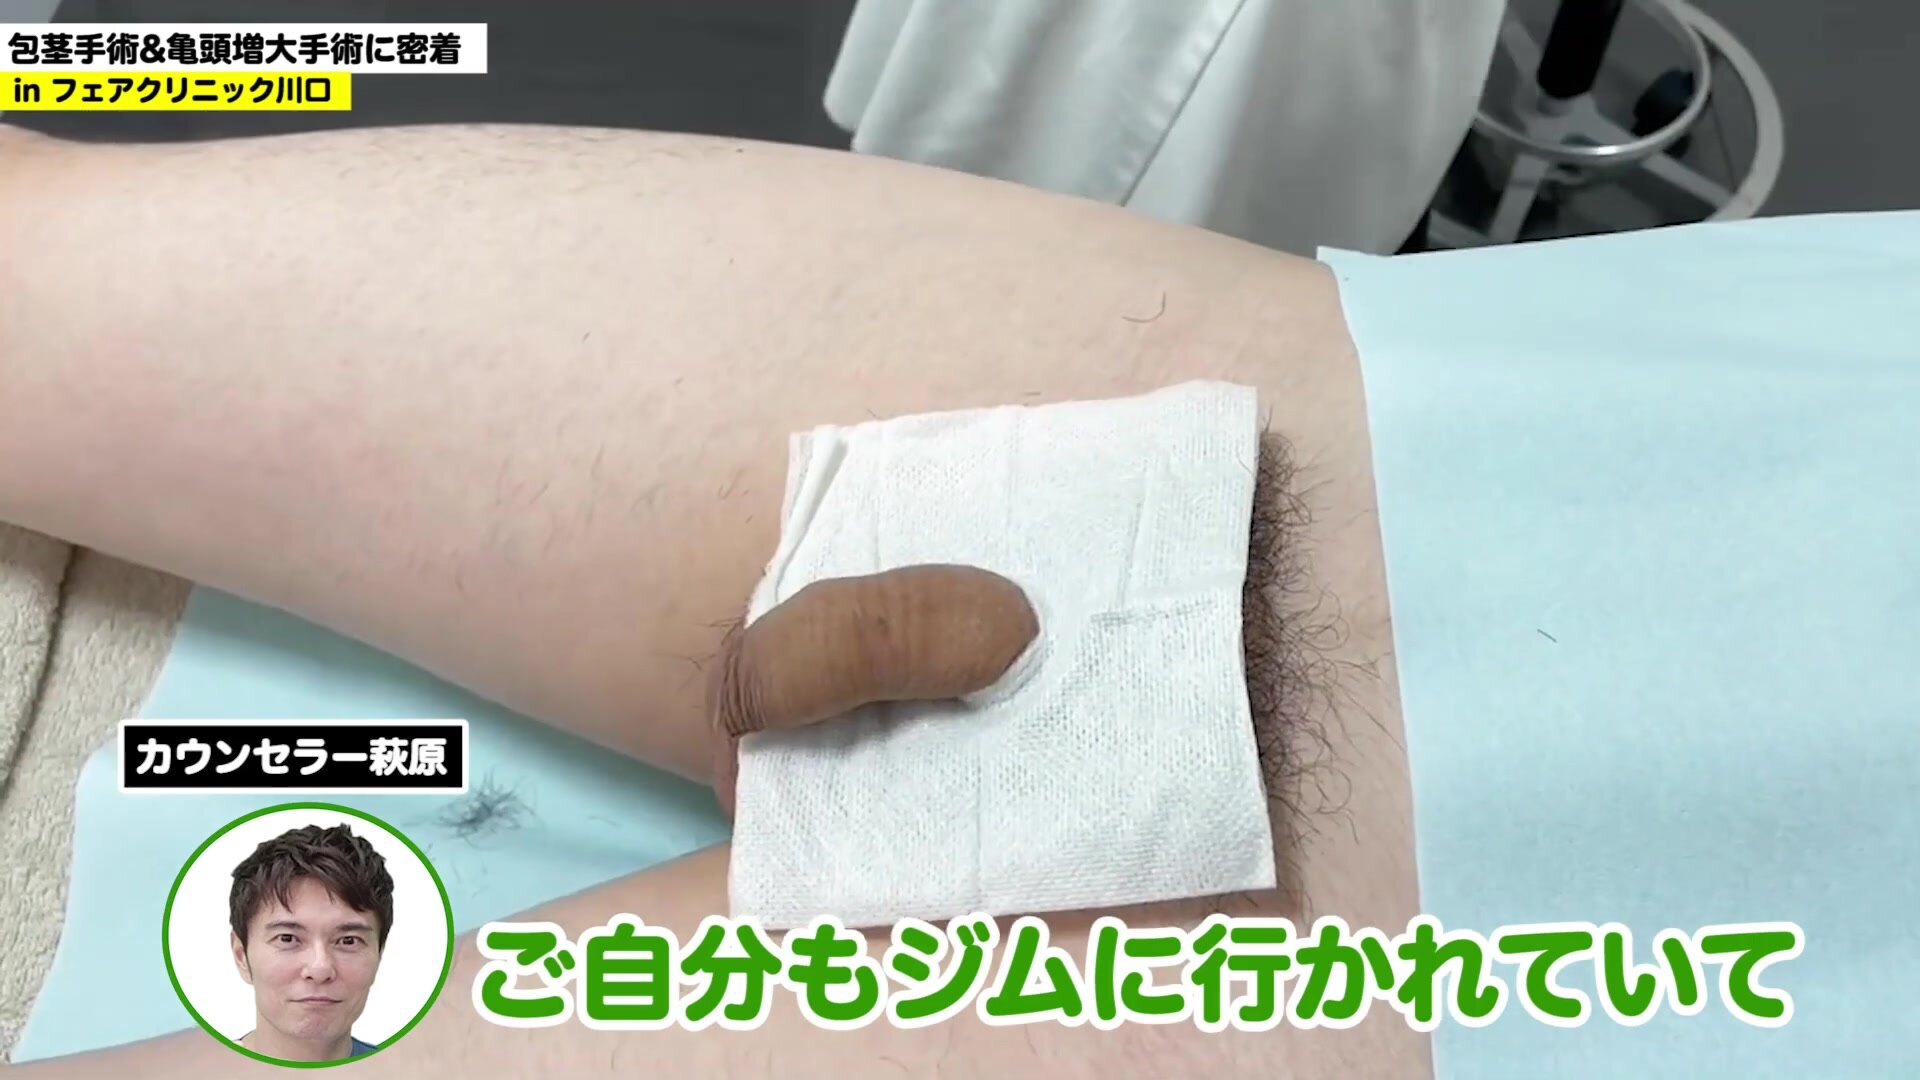 Japanese adult circumcision